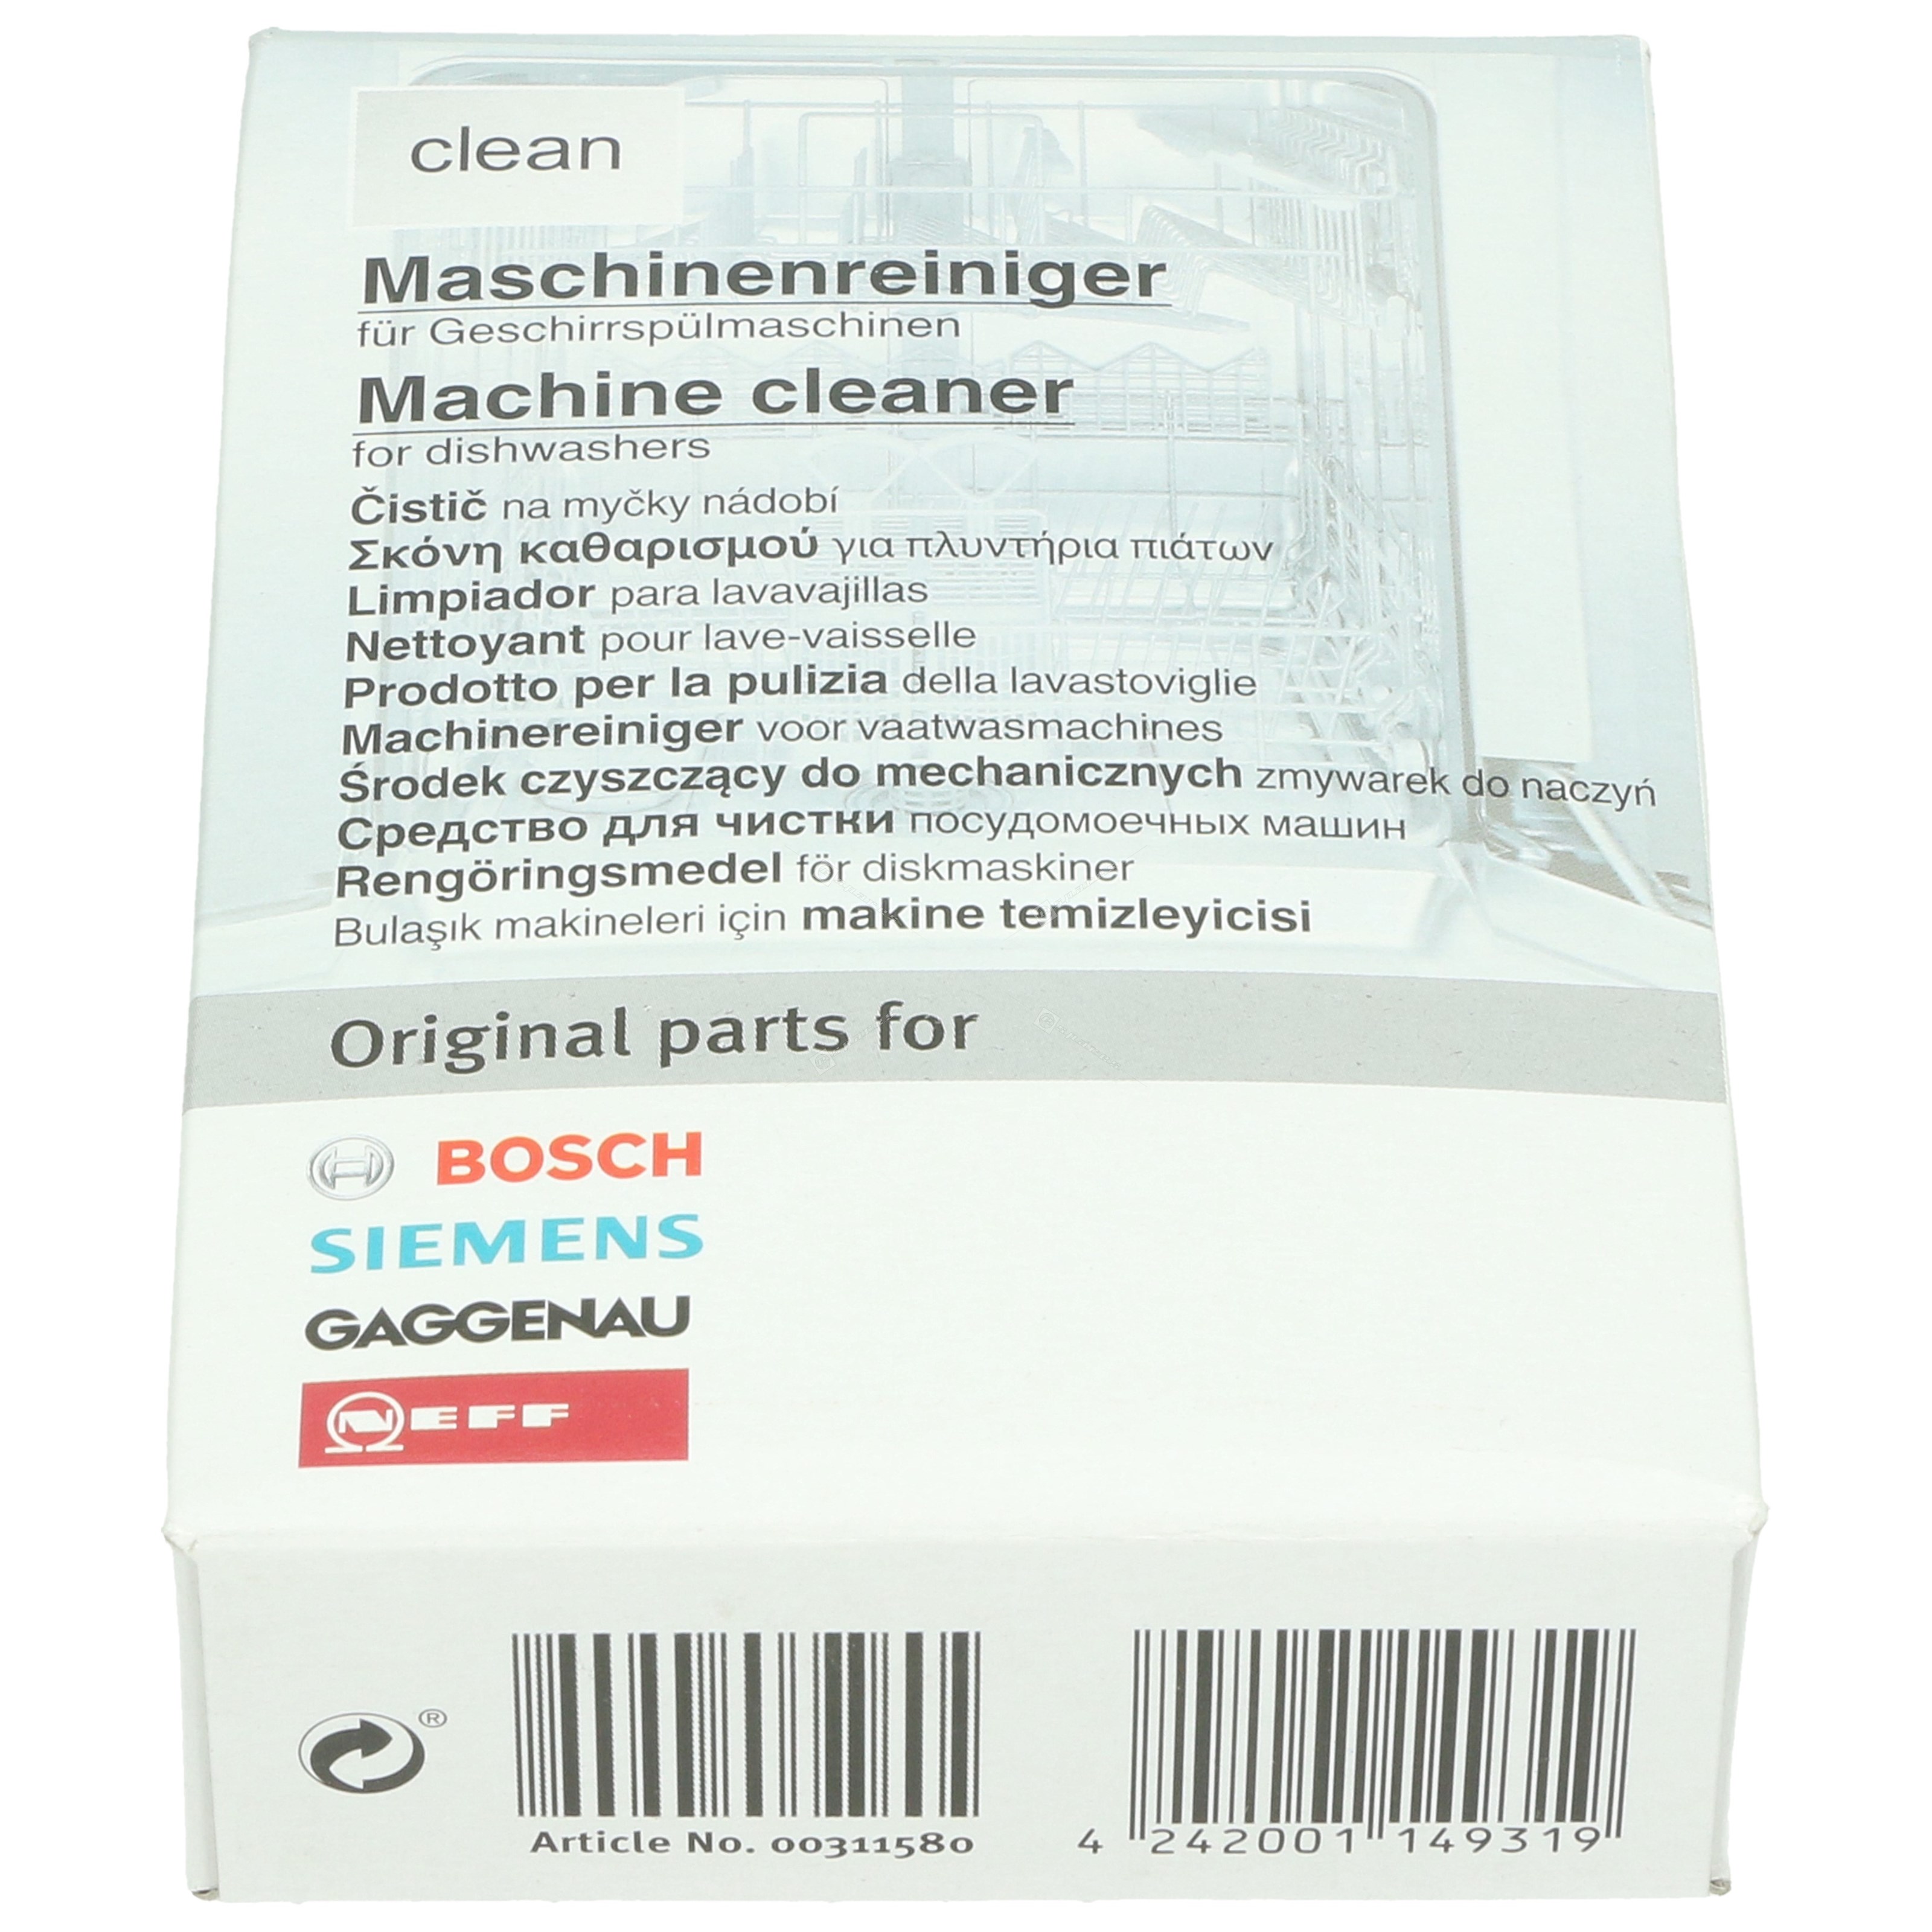 bosch dishwasher cleaning powder